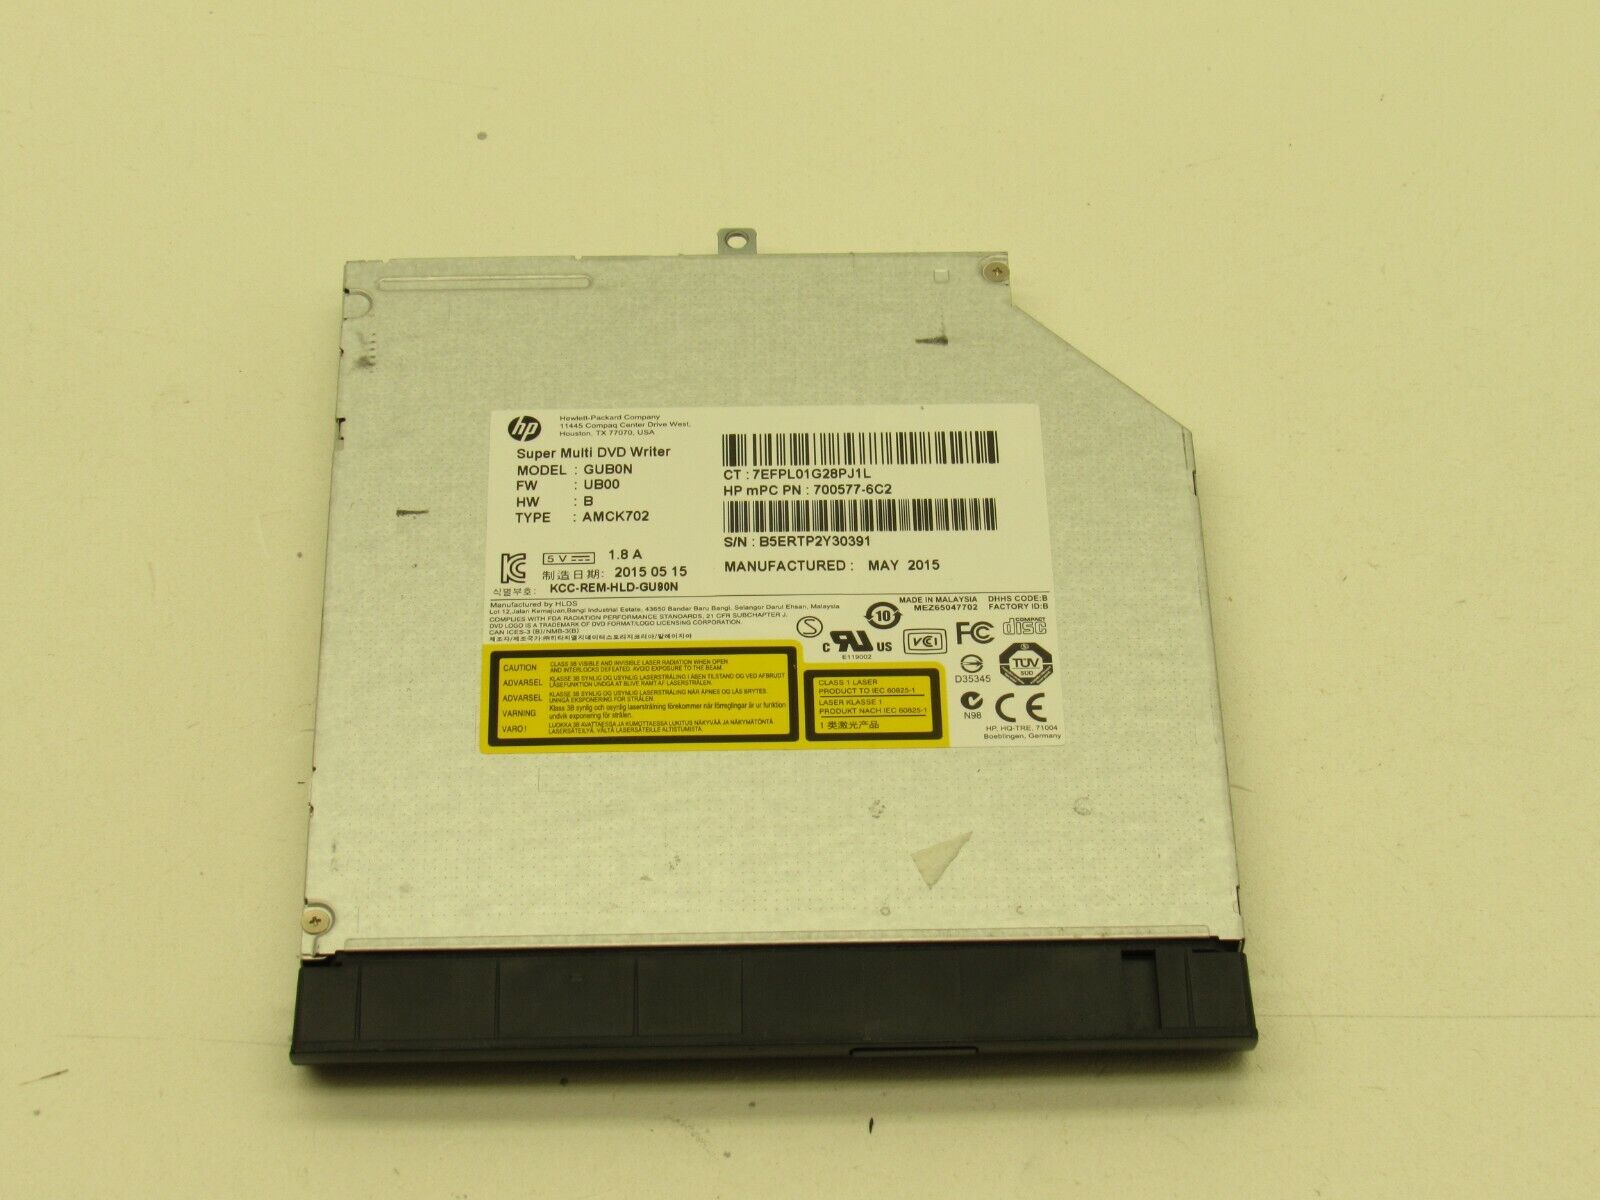 HP 355 G2 Super Multi DVD Writer Optical SATA Drive GUB0N for 